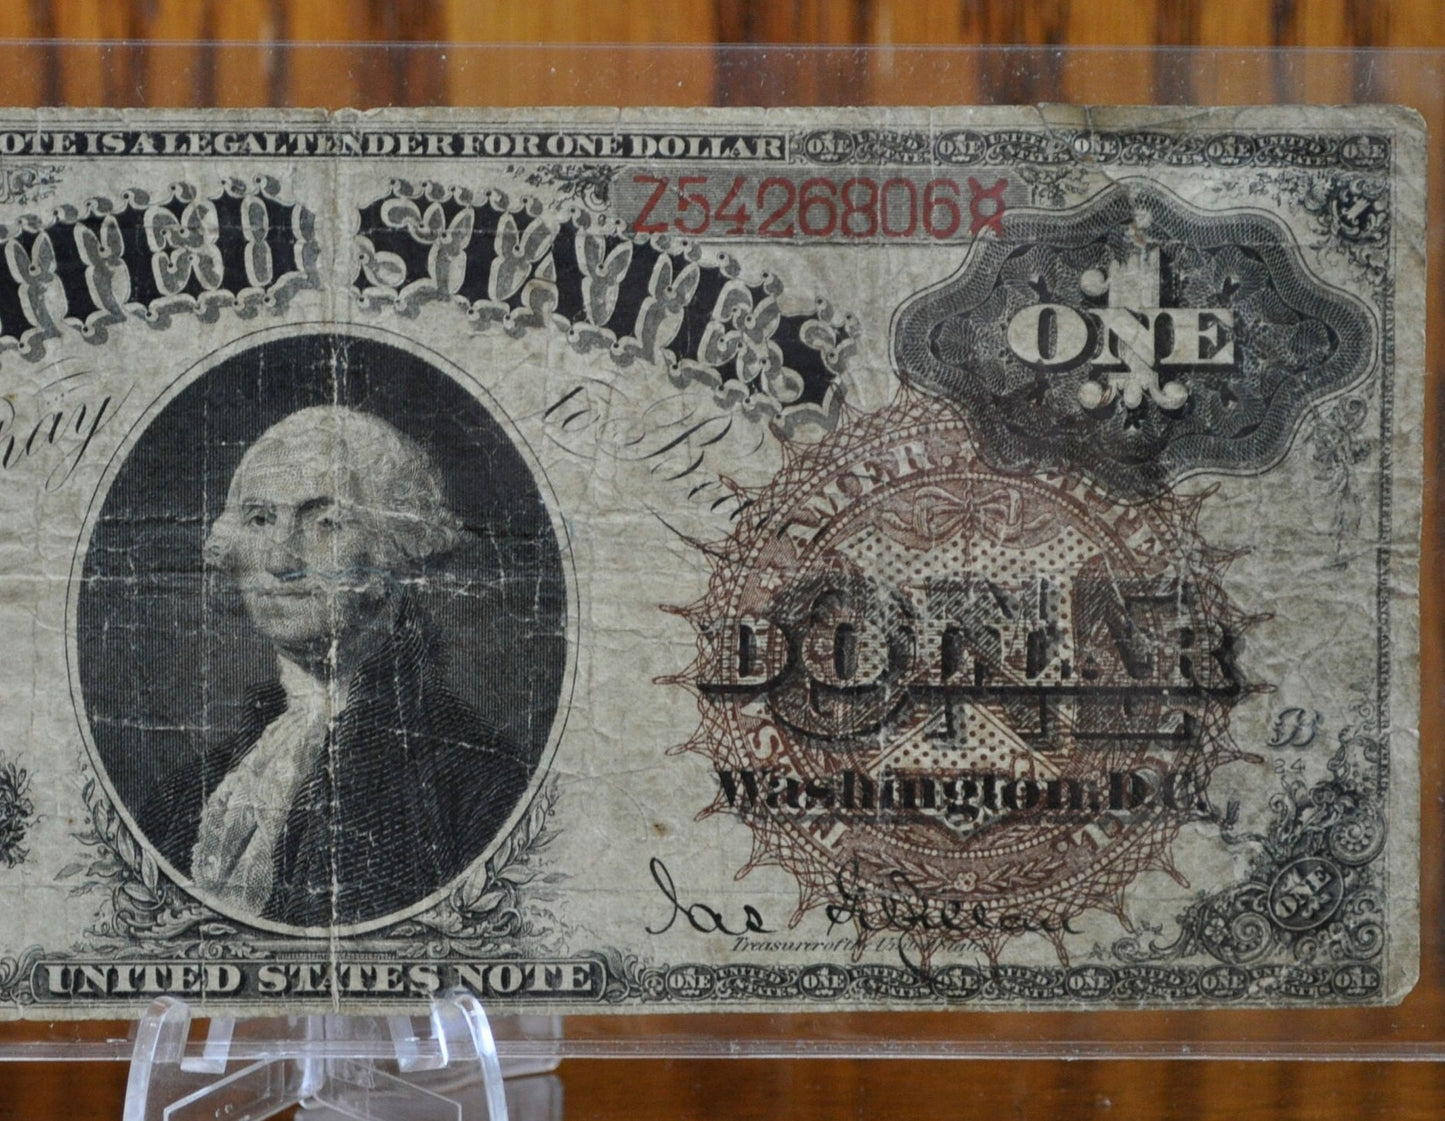 1880 1 Dollar Bill Legal Tender Note, Fr#28 - VG (Very Good) Grade / Condition - 1880 Series One Dollar Legal Tender - Horse Blanket Note